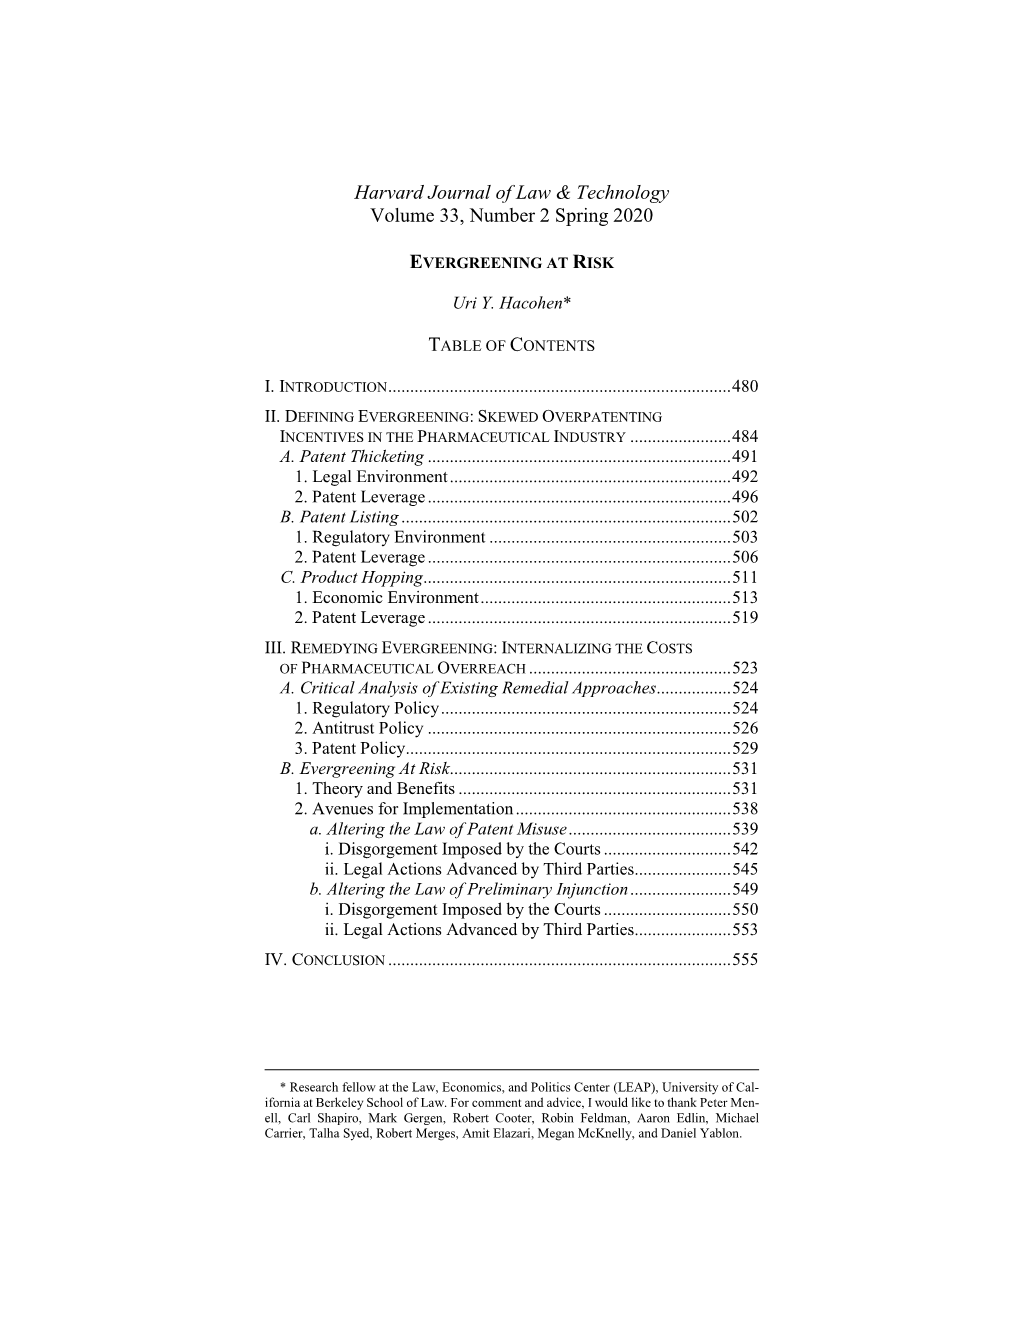 Harvard Journal of Law & Technology Volume 33, Number 2 Spring 2020